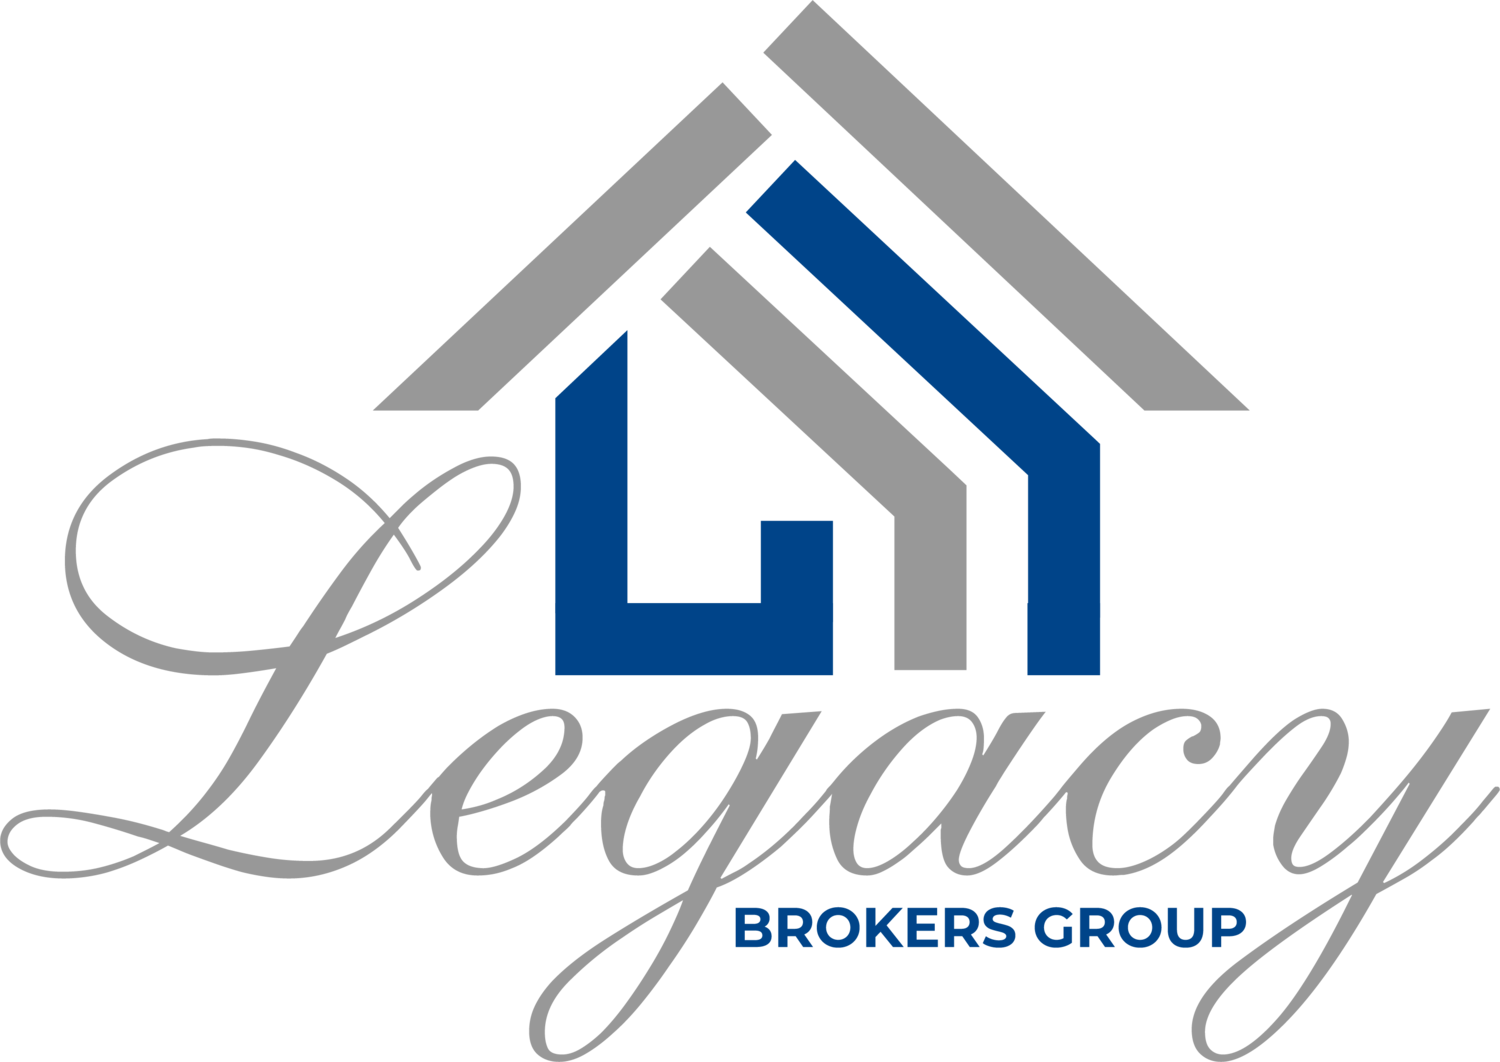 Legacy Brokers Group